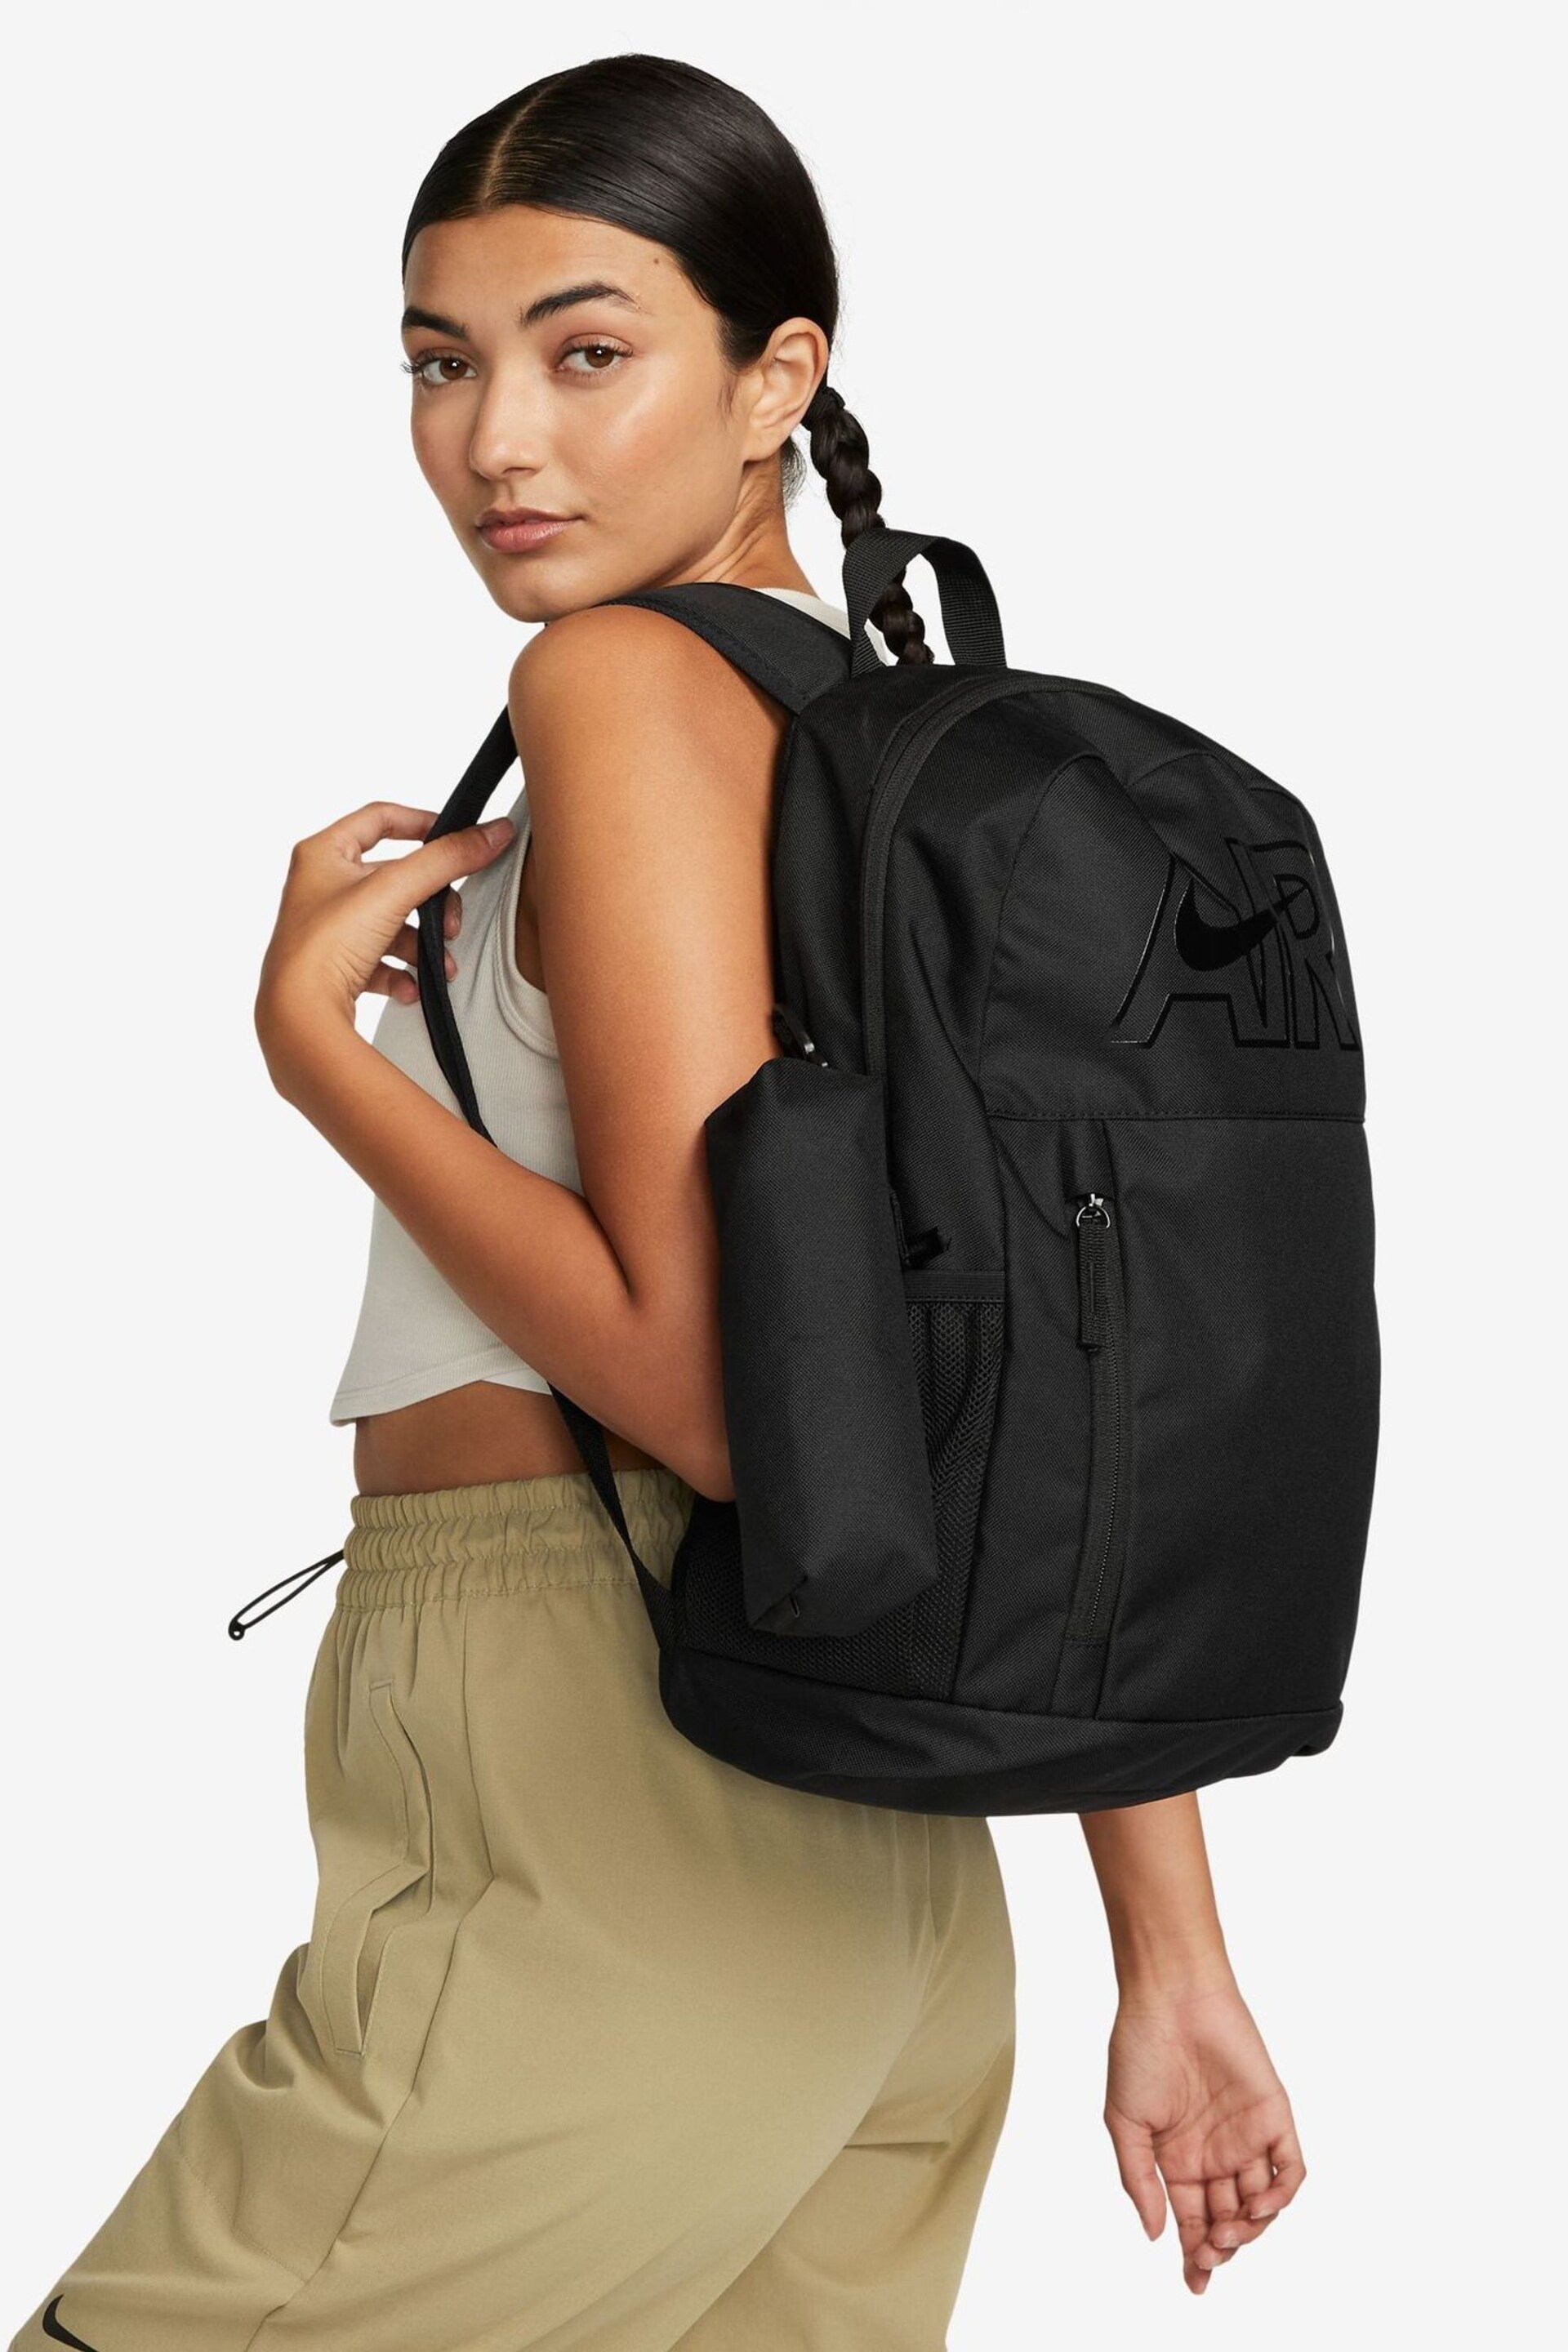 Nike Black Bag - Image 1 of 8